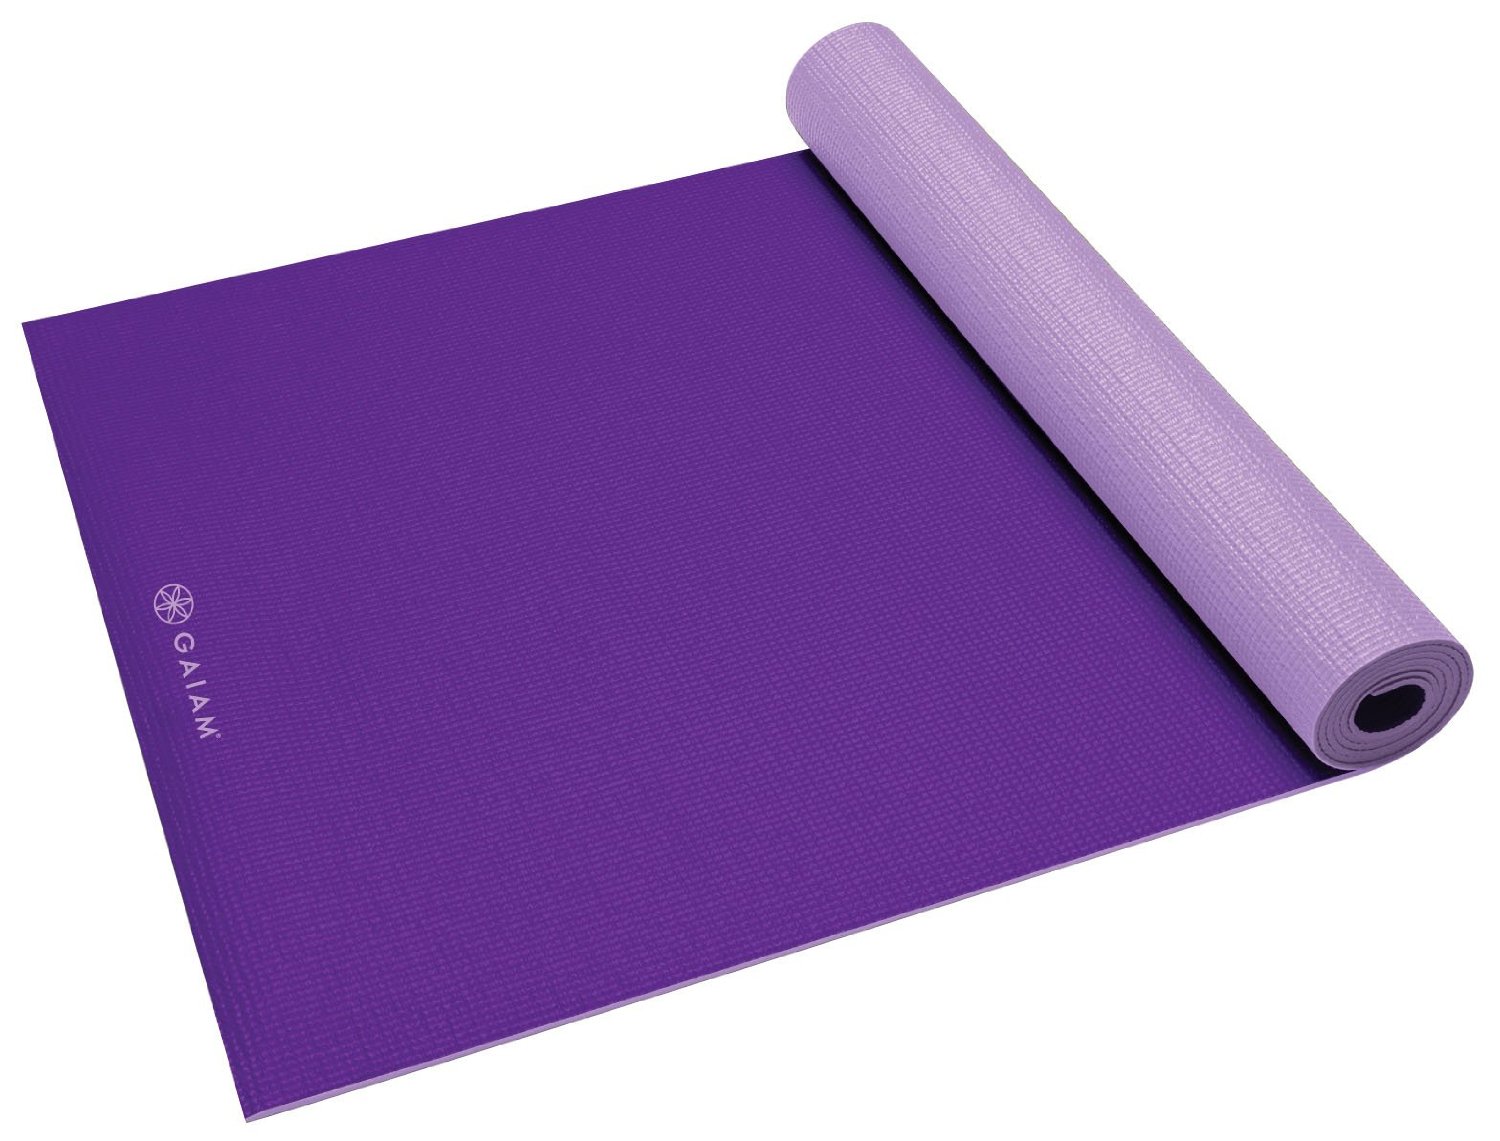 Gaiam - 2-Colour Reversible Yoga Mat - Citron Meadow 3mm - Save-On